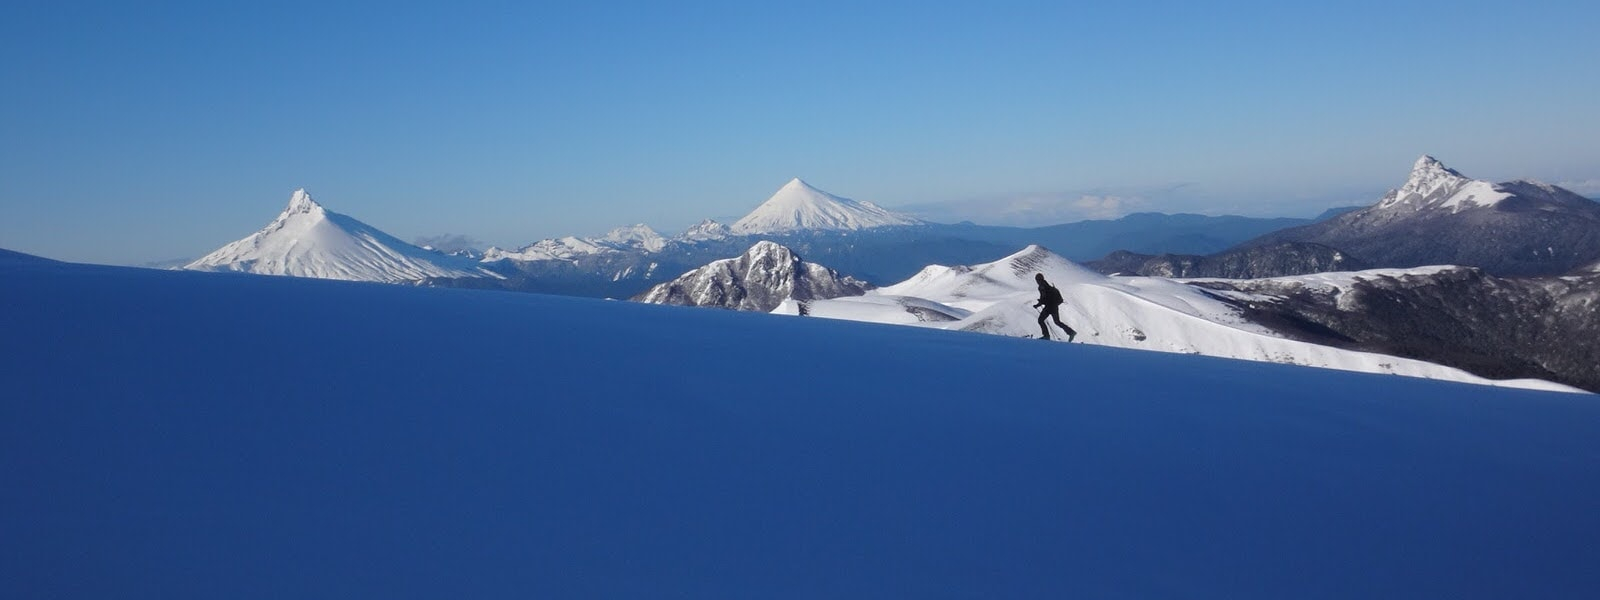 Chile volcano skiing and ski touring